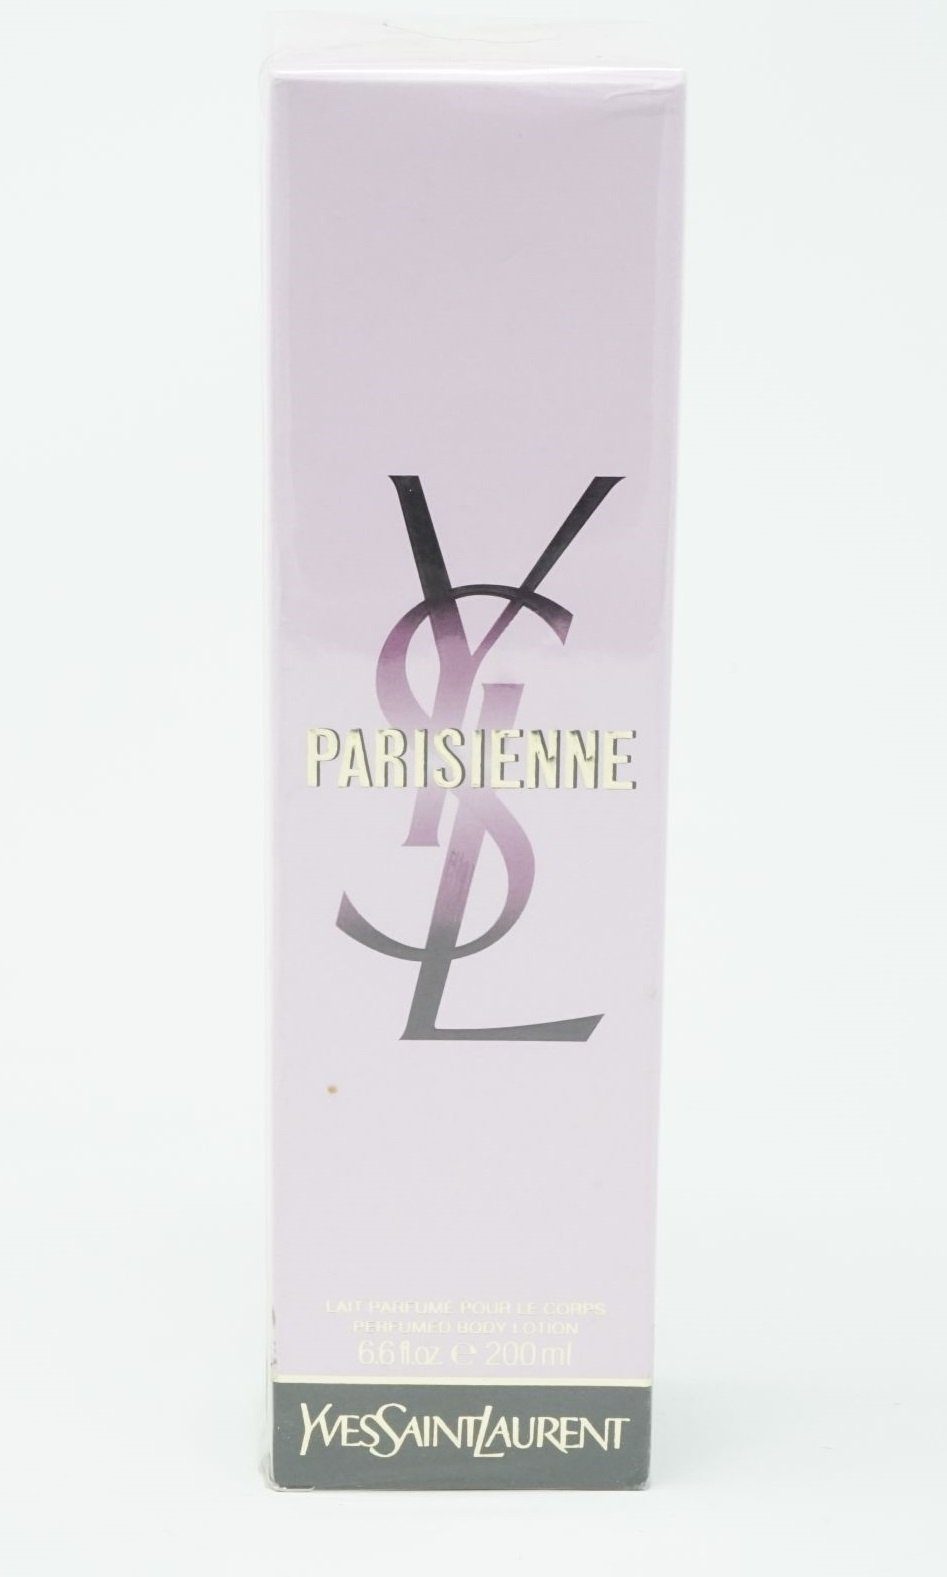 Parisienne body LAURENT Bodylotion Lotion SAINT Laurent Perfumed Yves YVES Saint 200ml